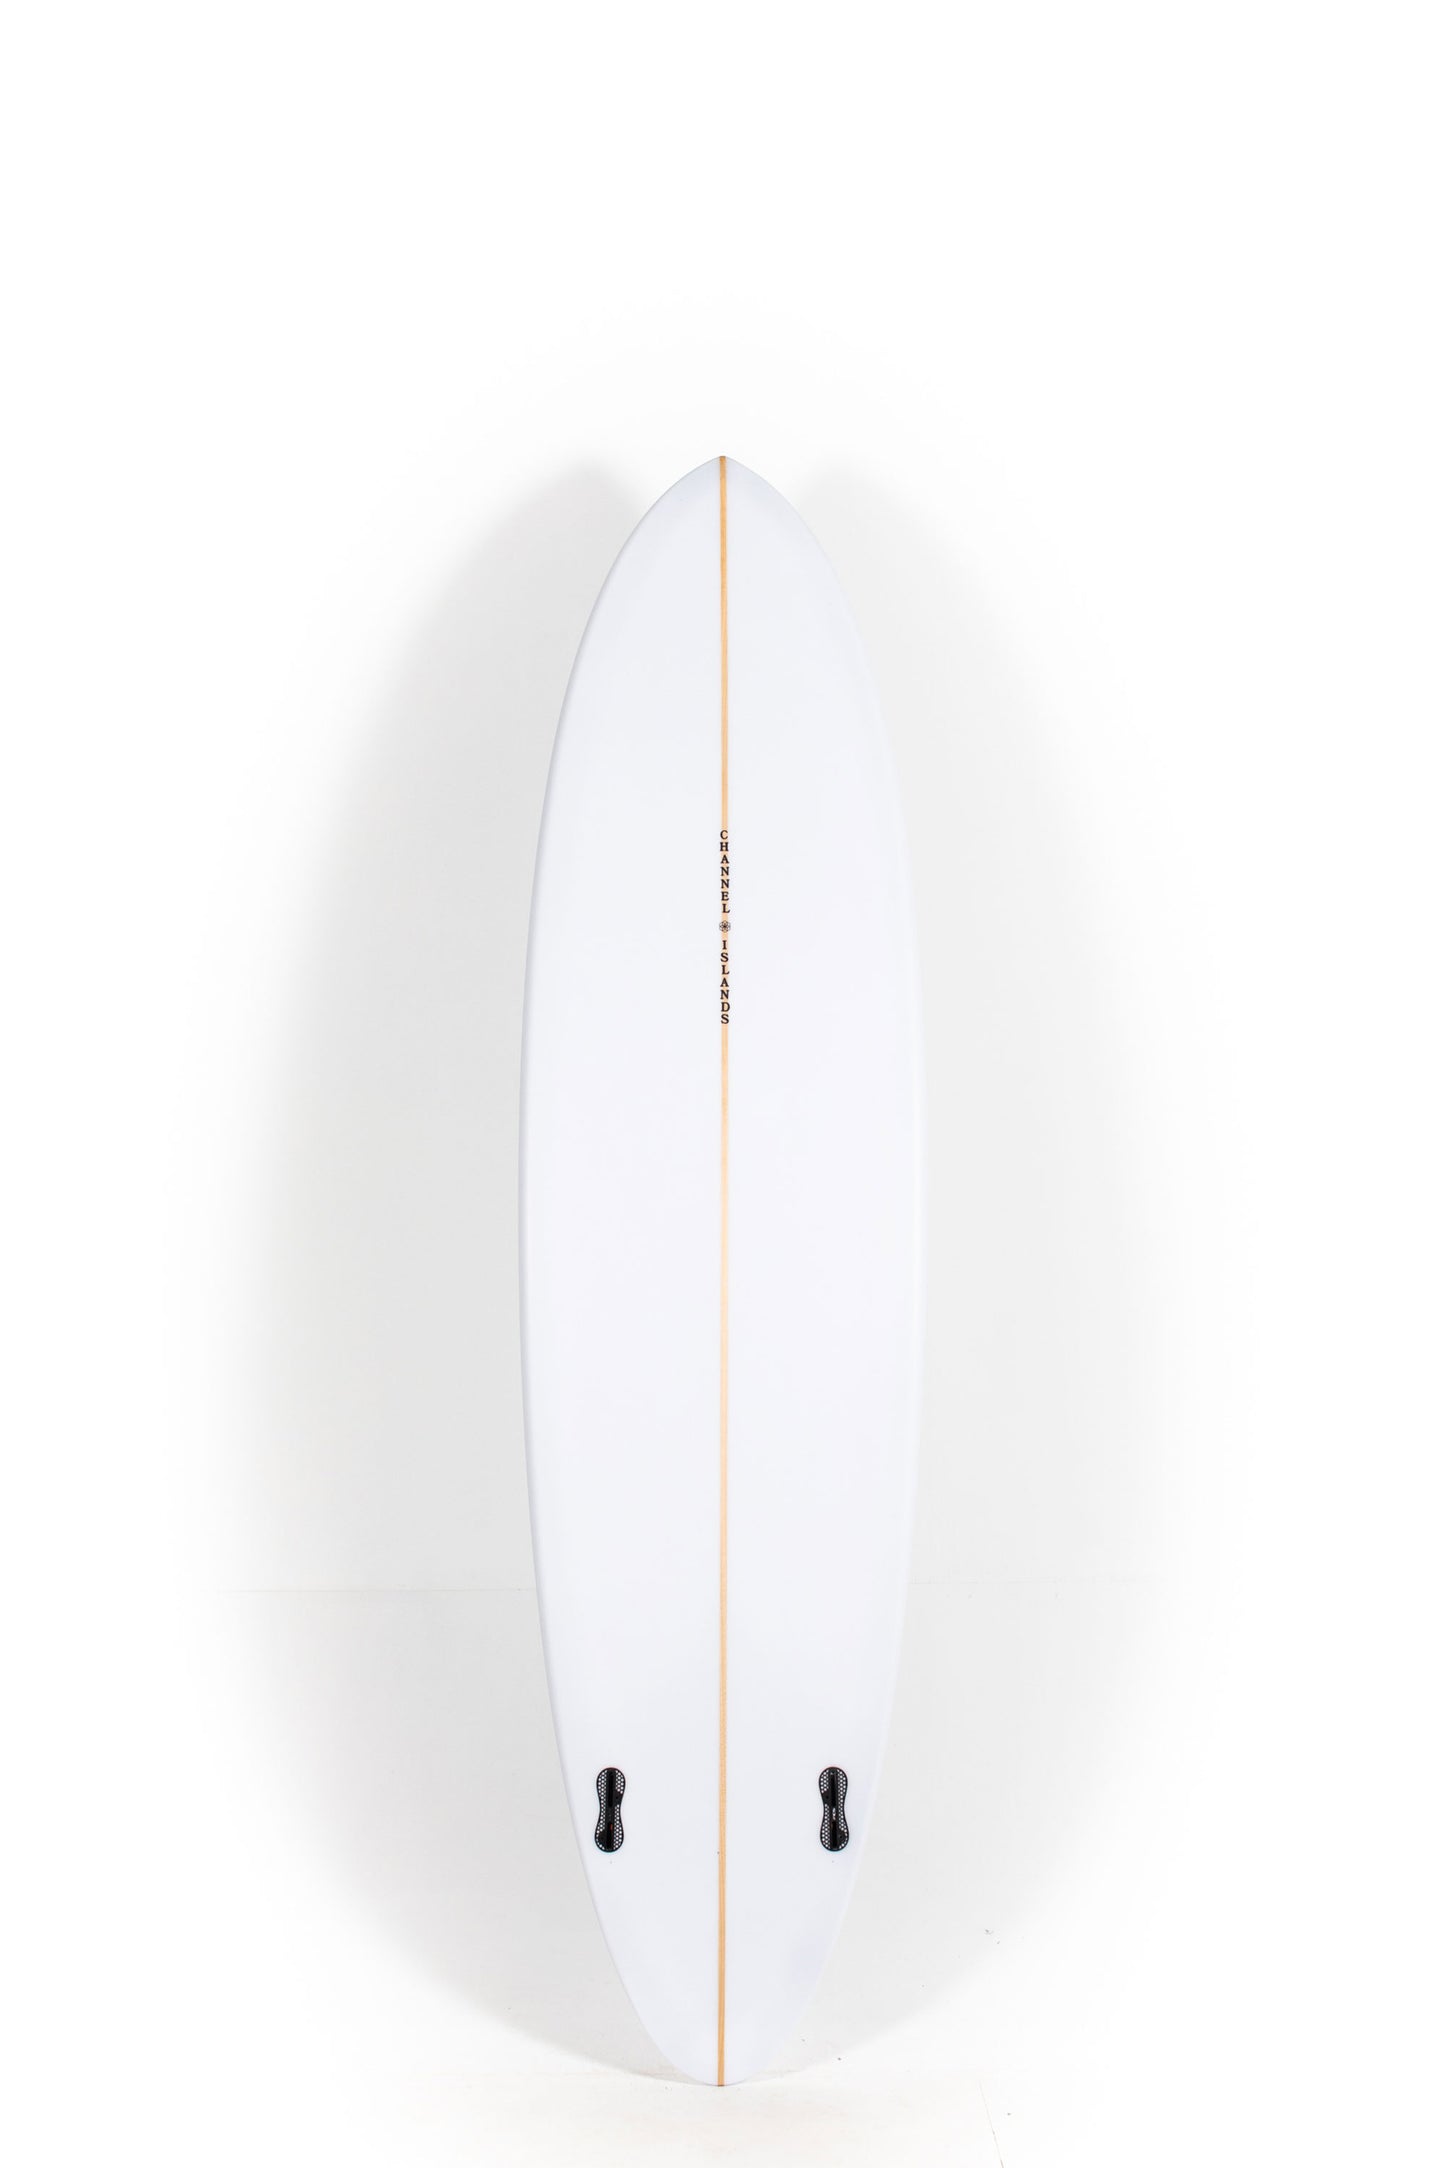 Pukas Surf Shop - Channel Islands - CI MID TWIN - 7'3" x 21 1/2 x 2 5/16 - 50,6L - CI25669